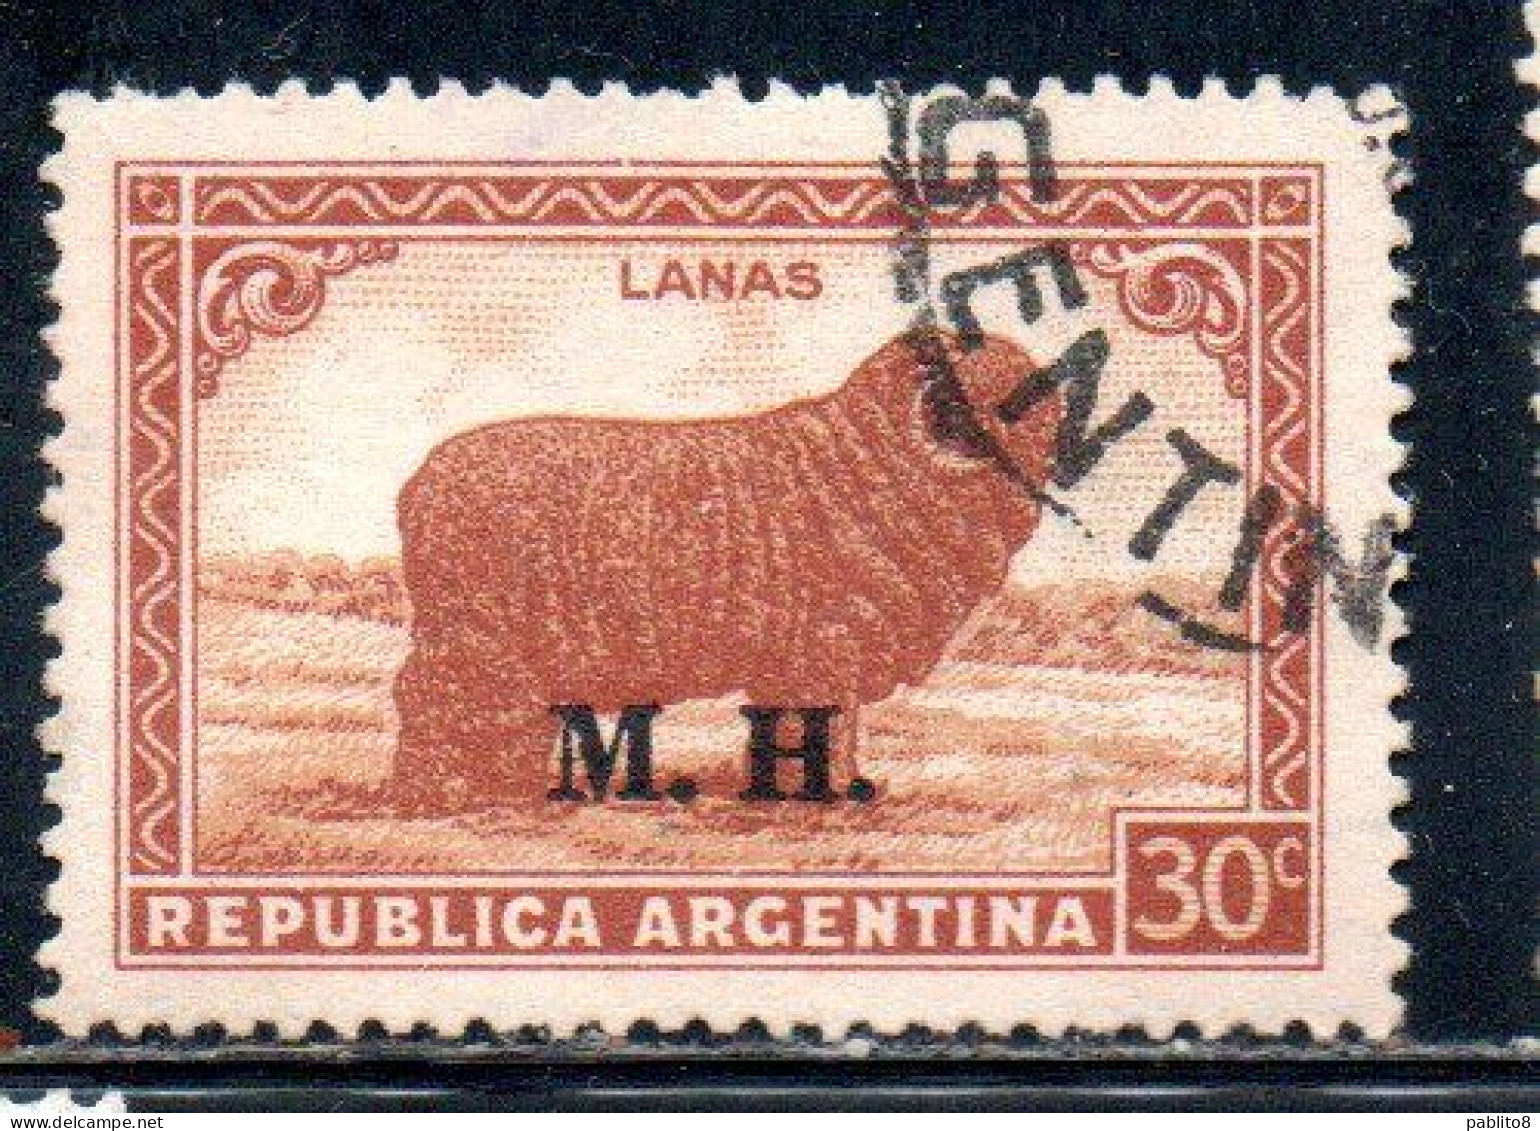 ARGENTINA 1935 1937 OFFICIAL DEPARTMENT STAMP OVERPRINTED M.H. MINISTRY OF FINANCE MH 30c USED USADO - Dienstzegels